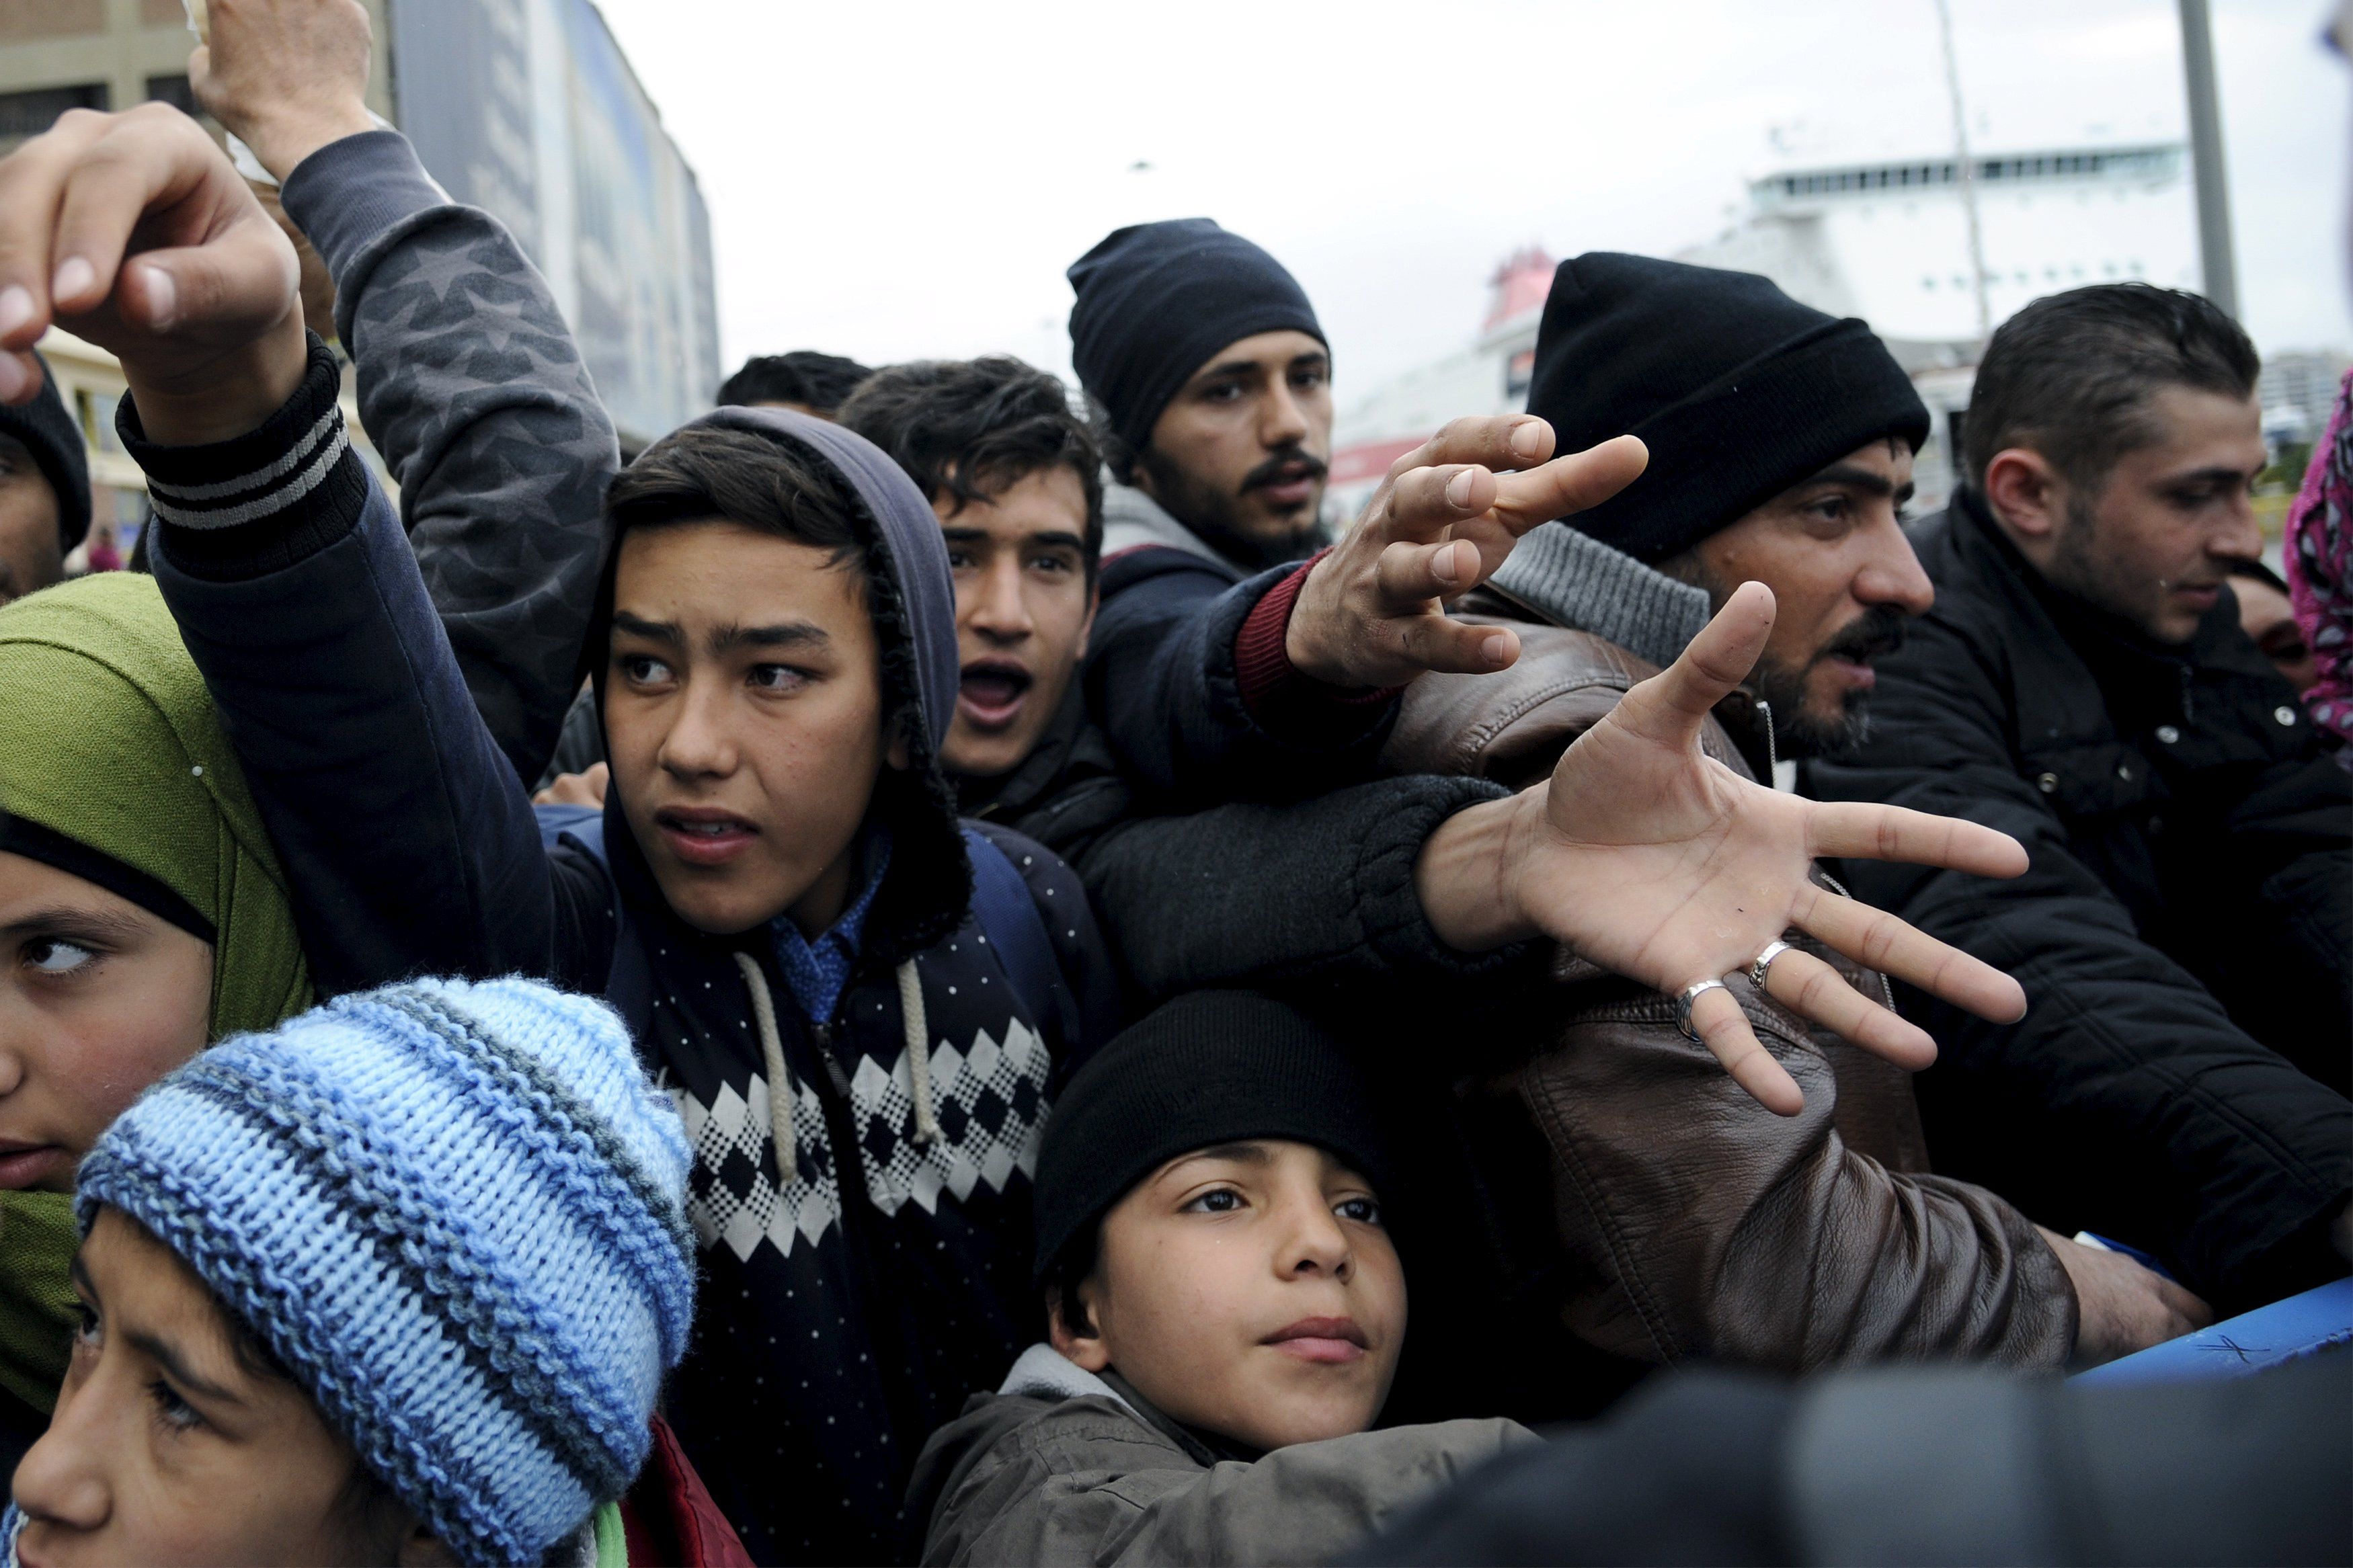 Нашенски гяволии: Ромите цакат гръцките каналджии